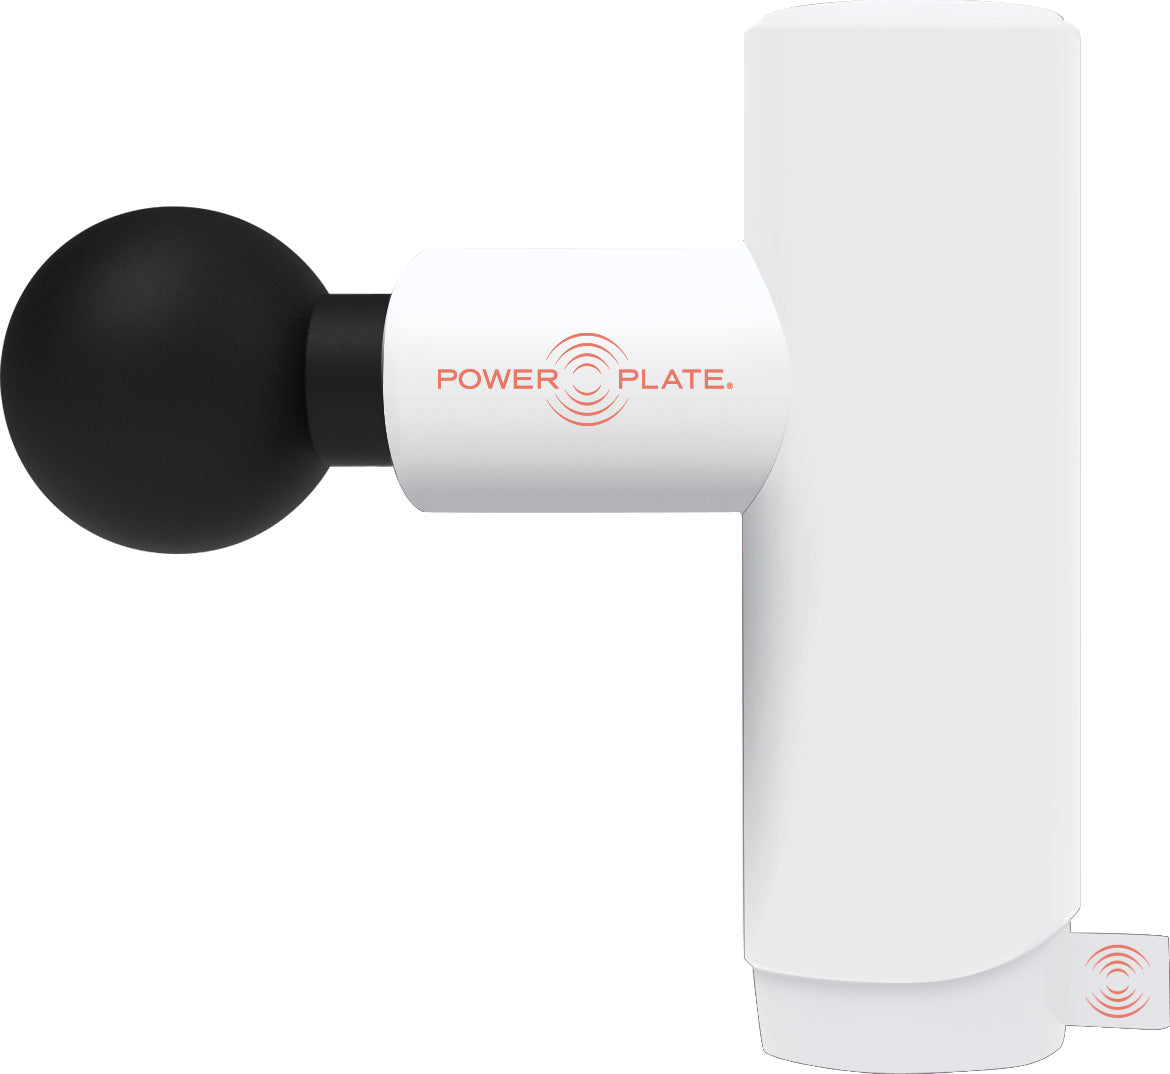 Power Plate Mini+ Massage Gun